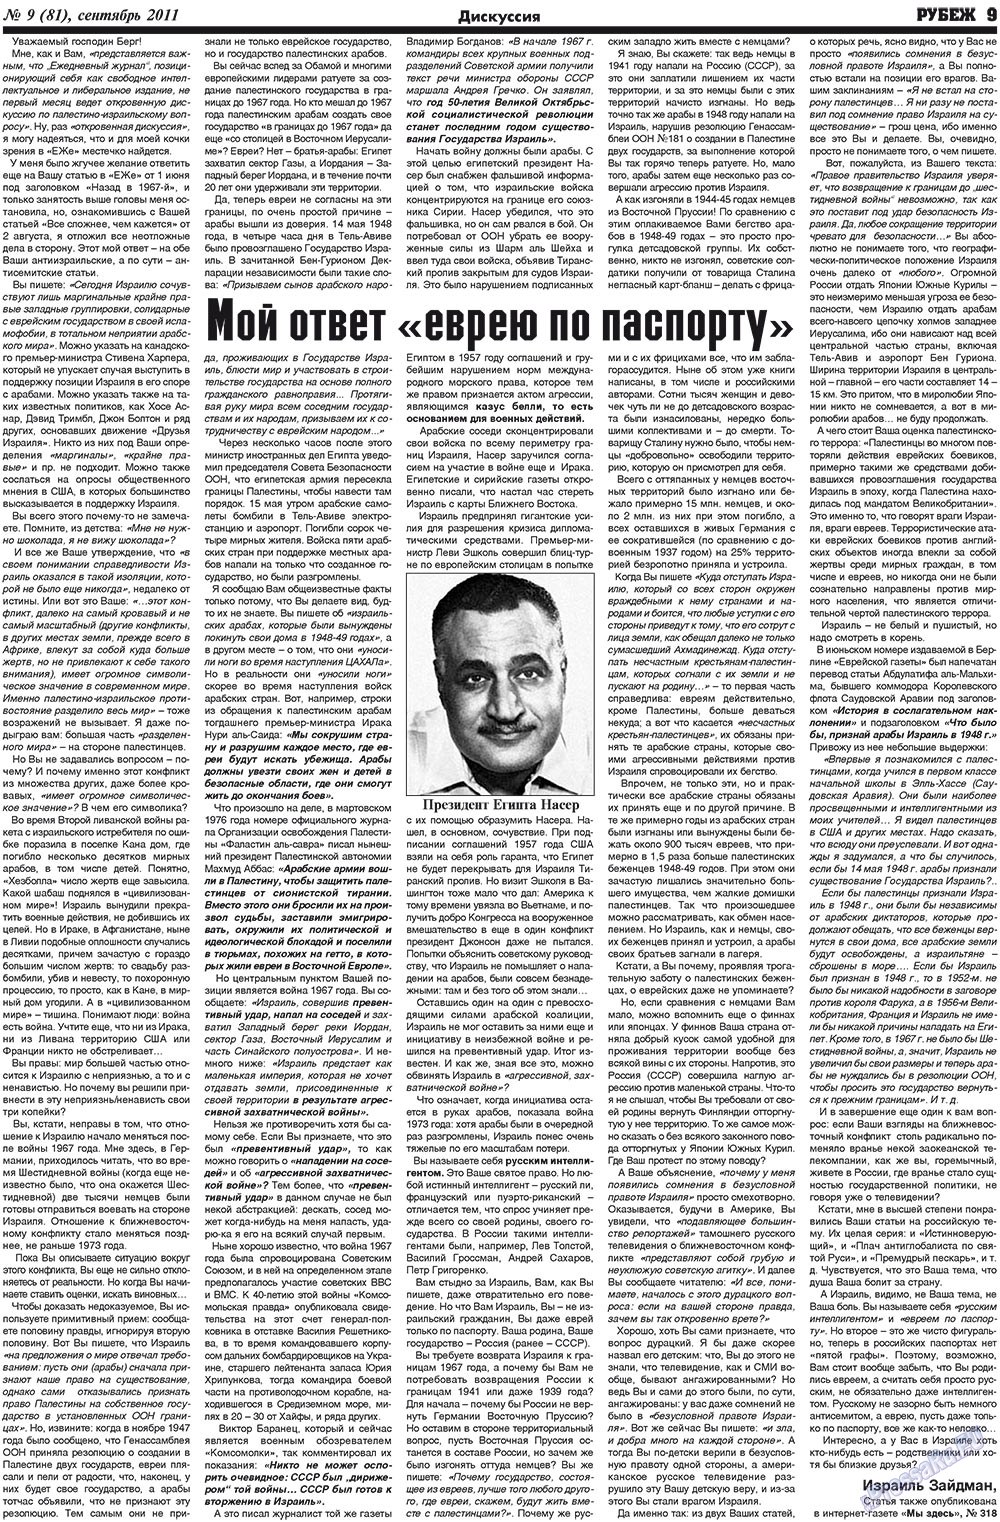 Рубеж, газета. 2011 №9 стр.9